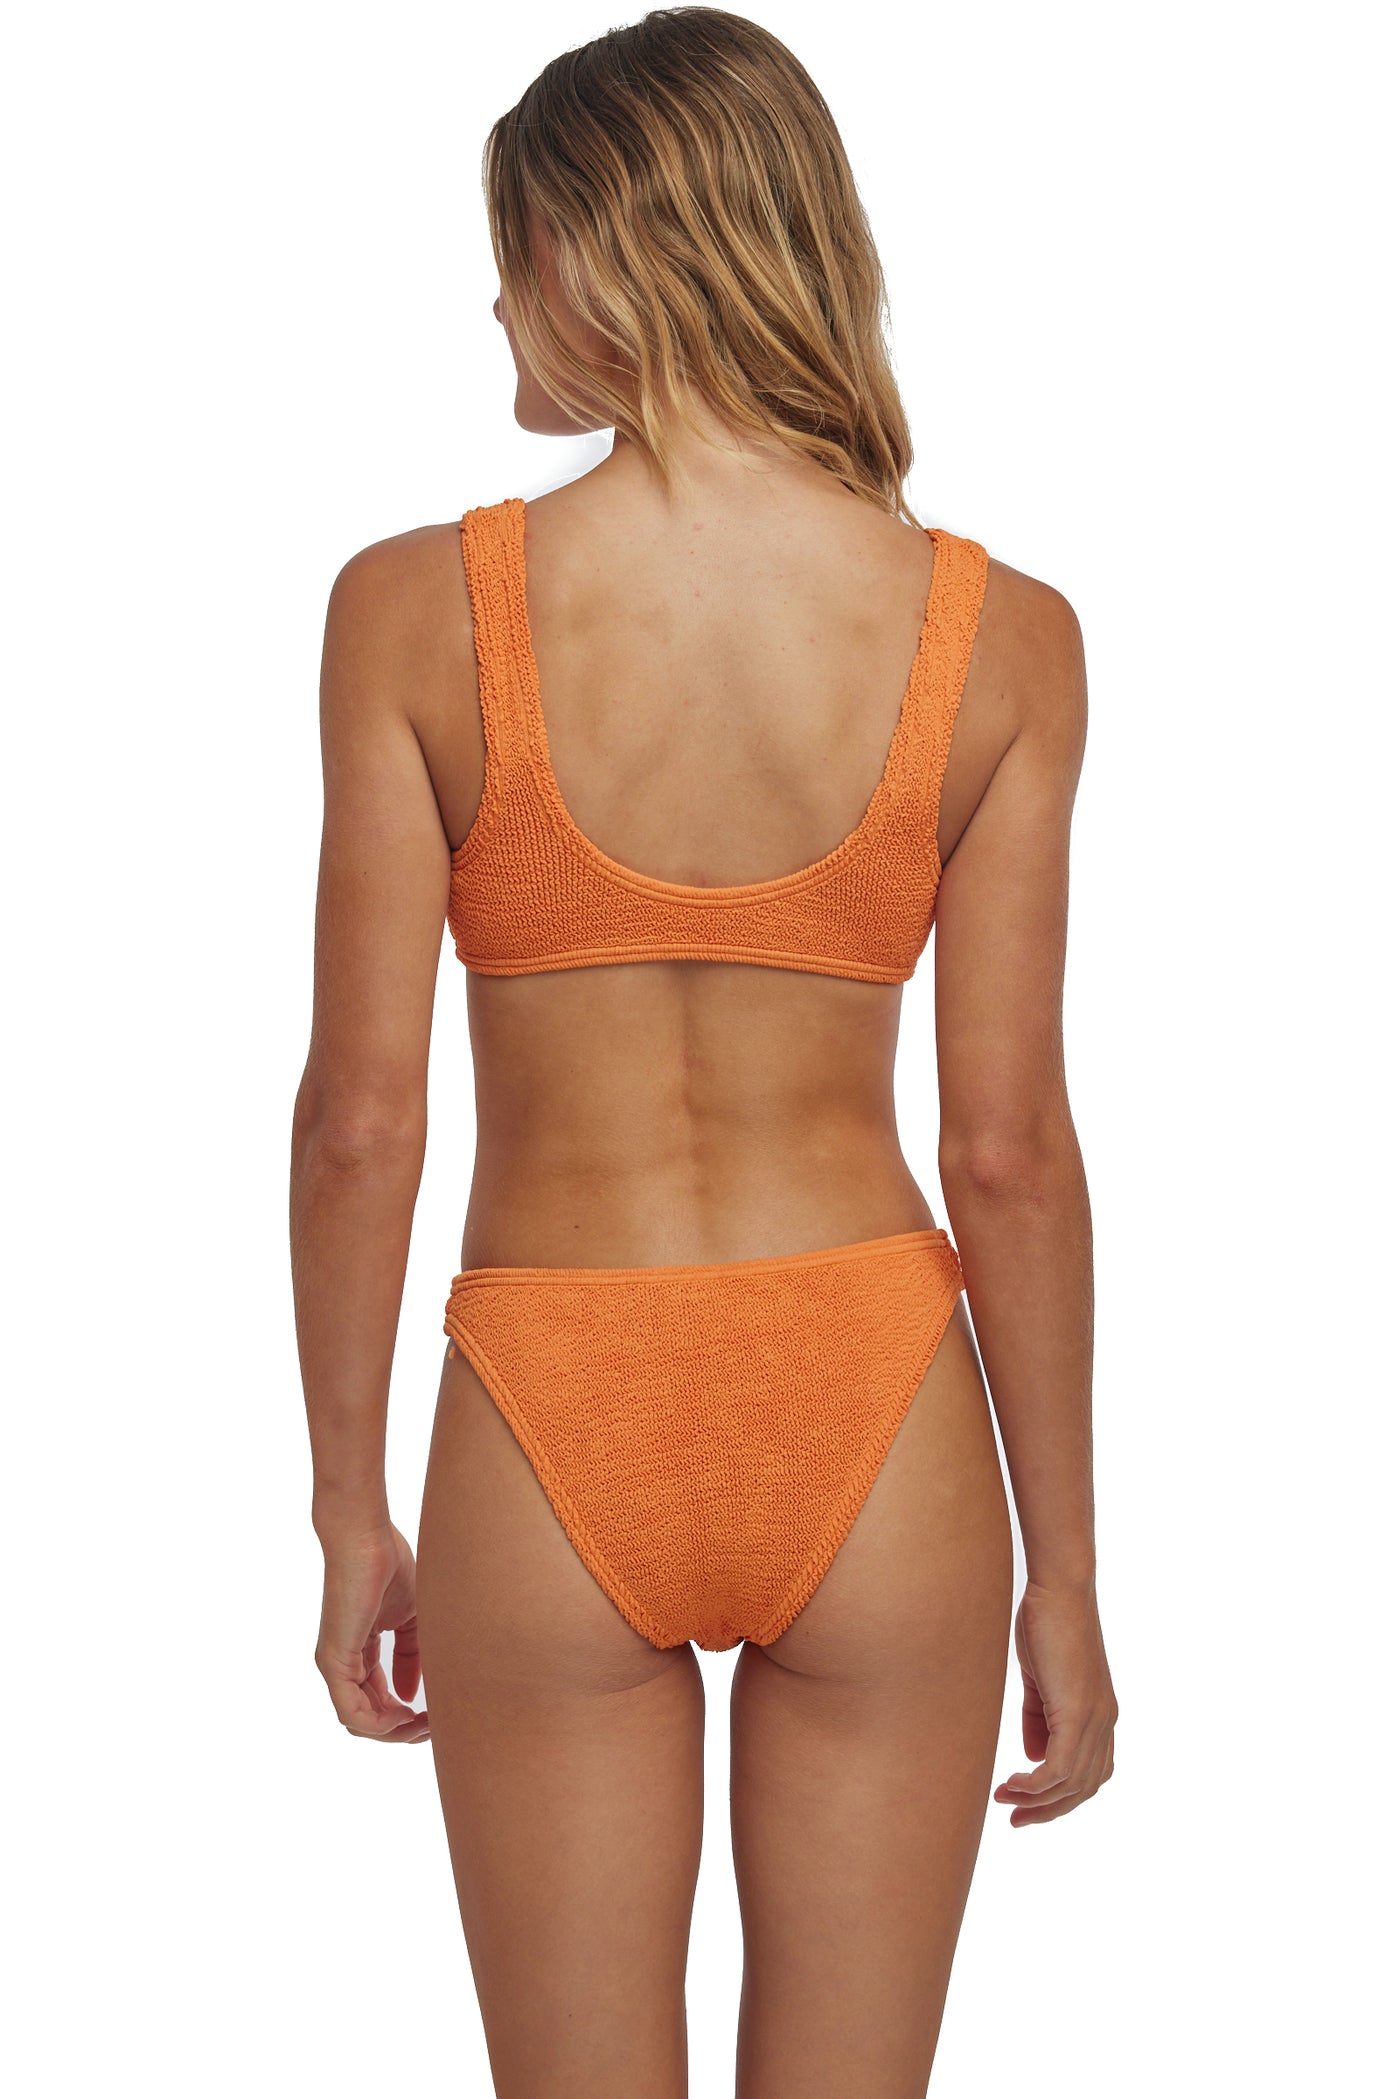 Barcelona Classic One Size Bikini TOP ONLY (Orange)